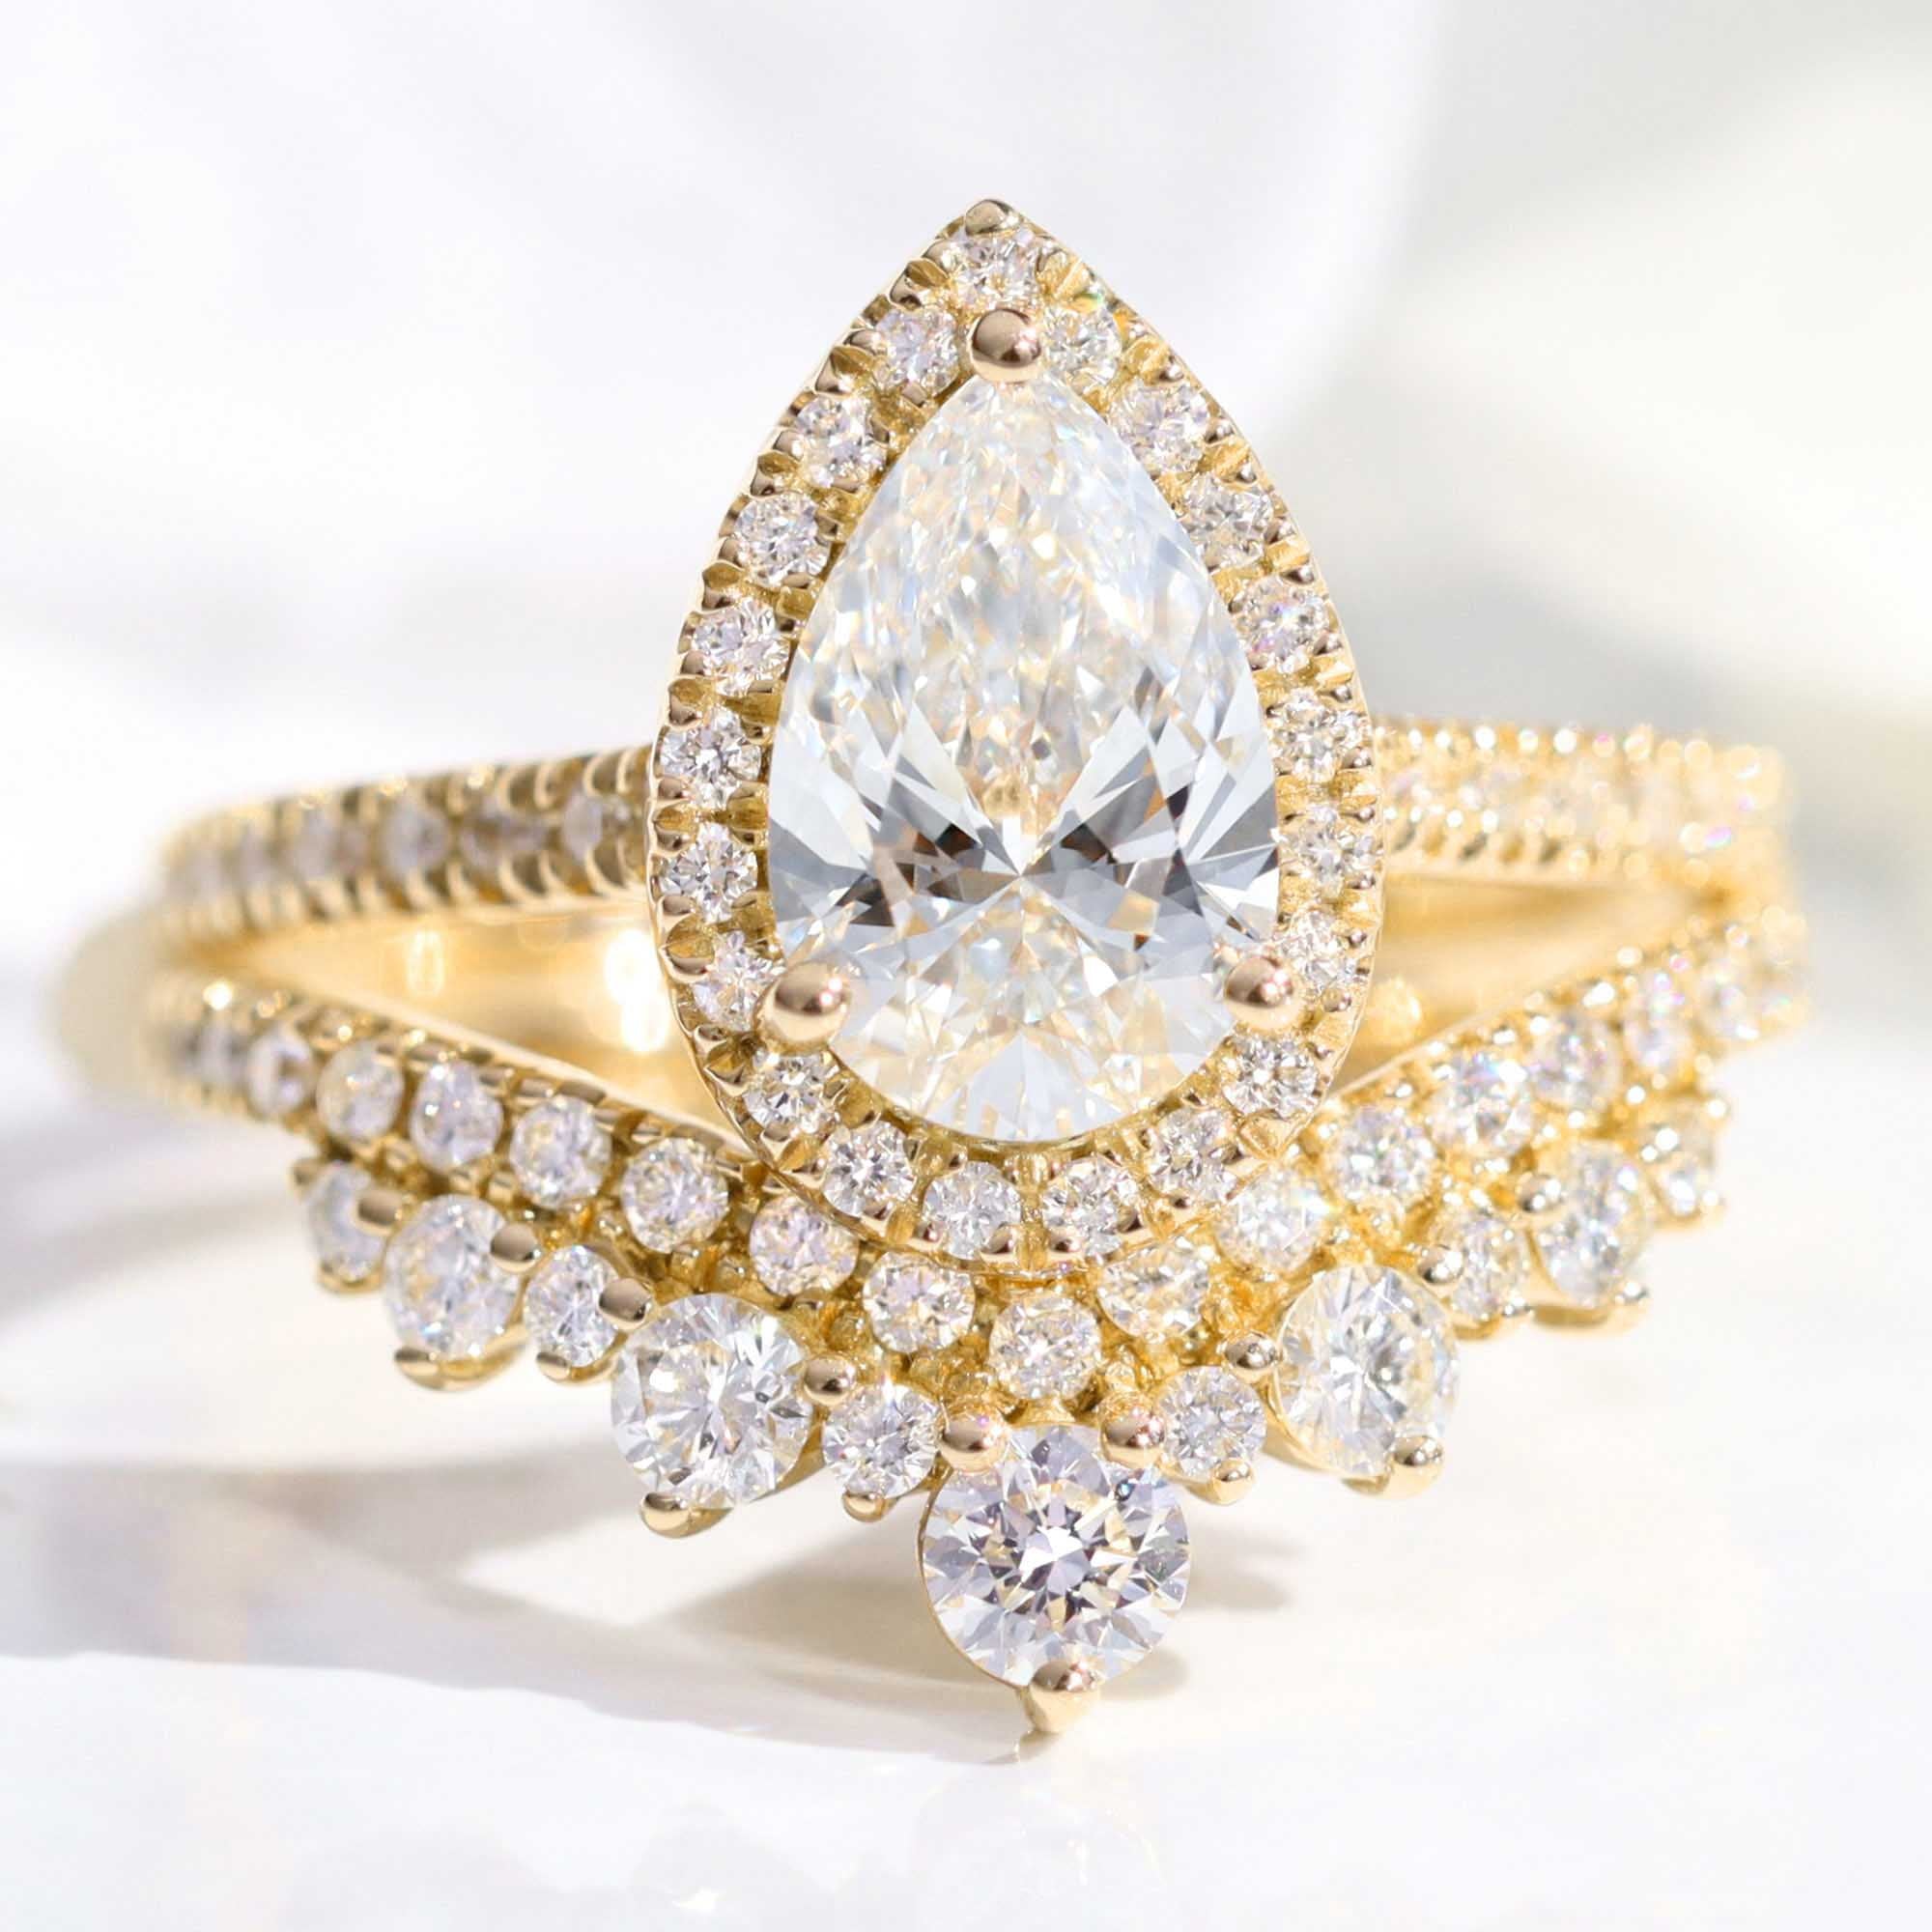 lab diamond ring stack yellow gold pear diamond halo engagement ring set La More Design Jewelry